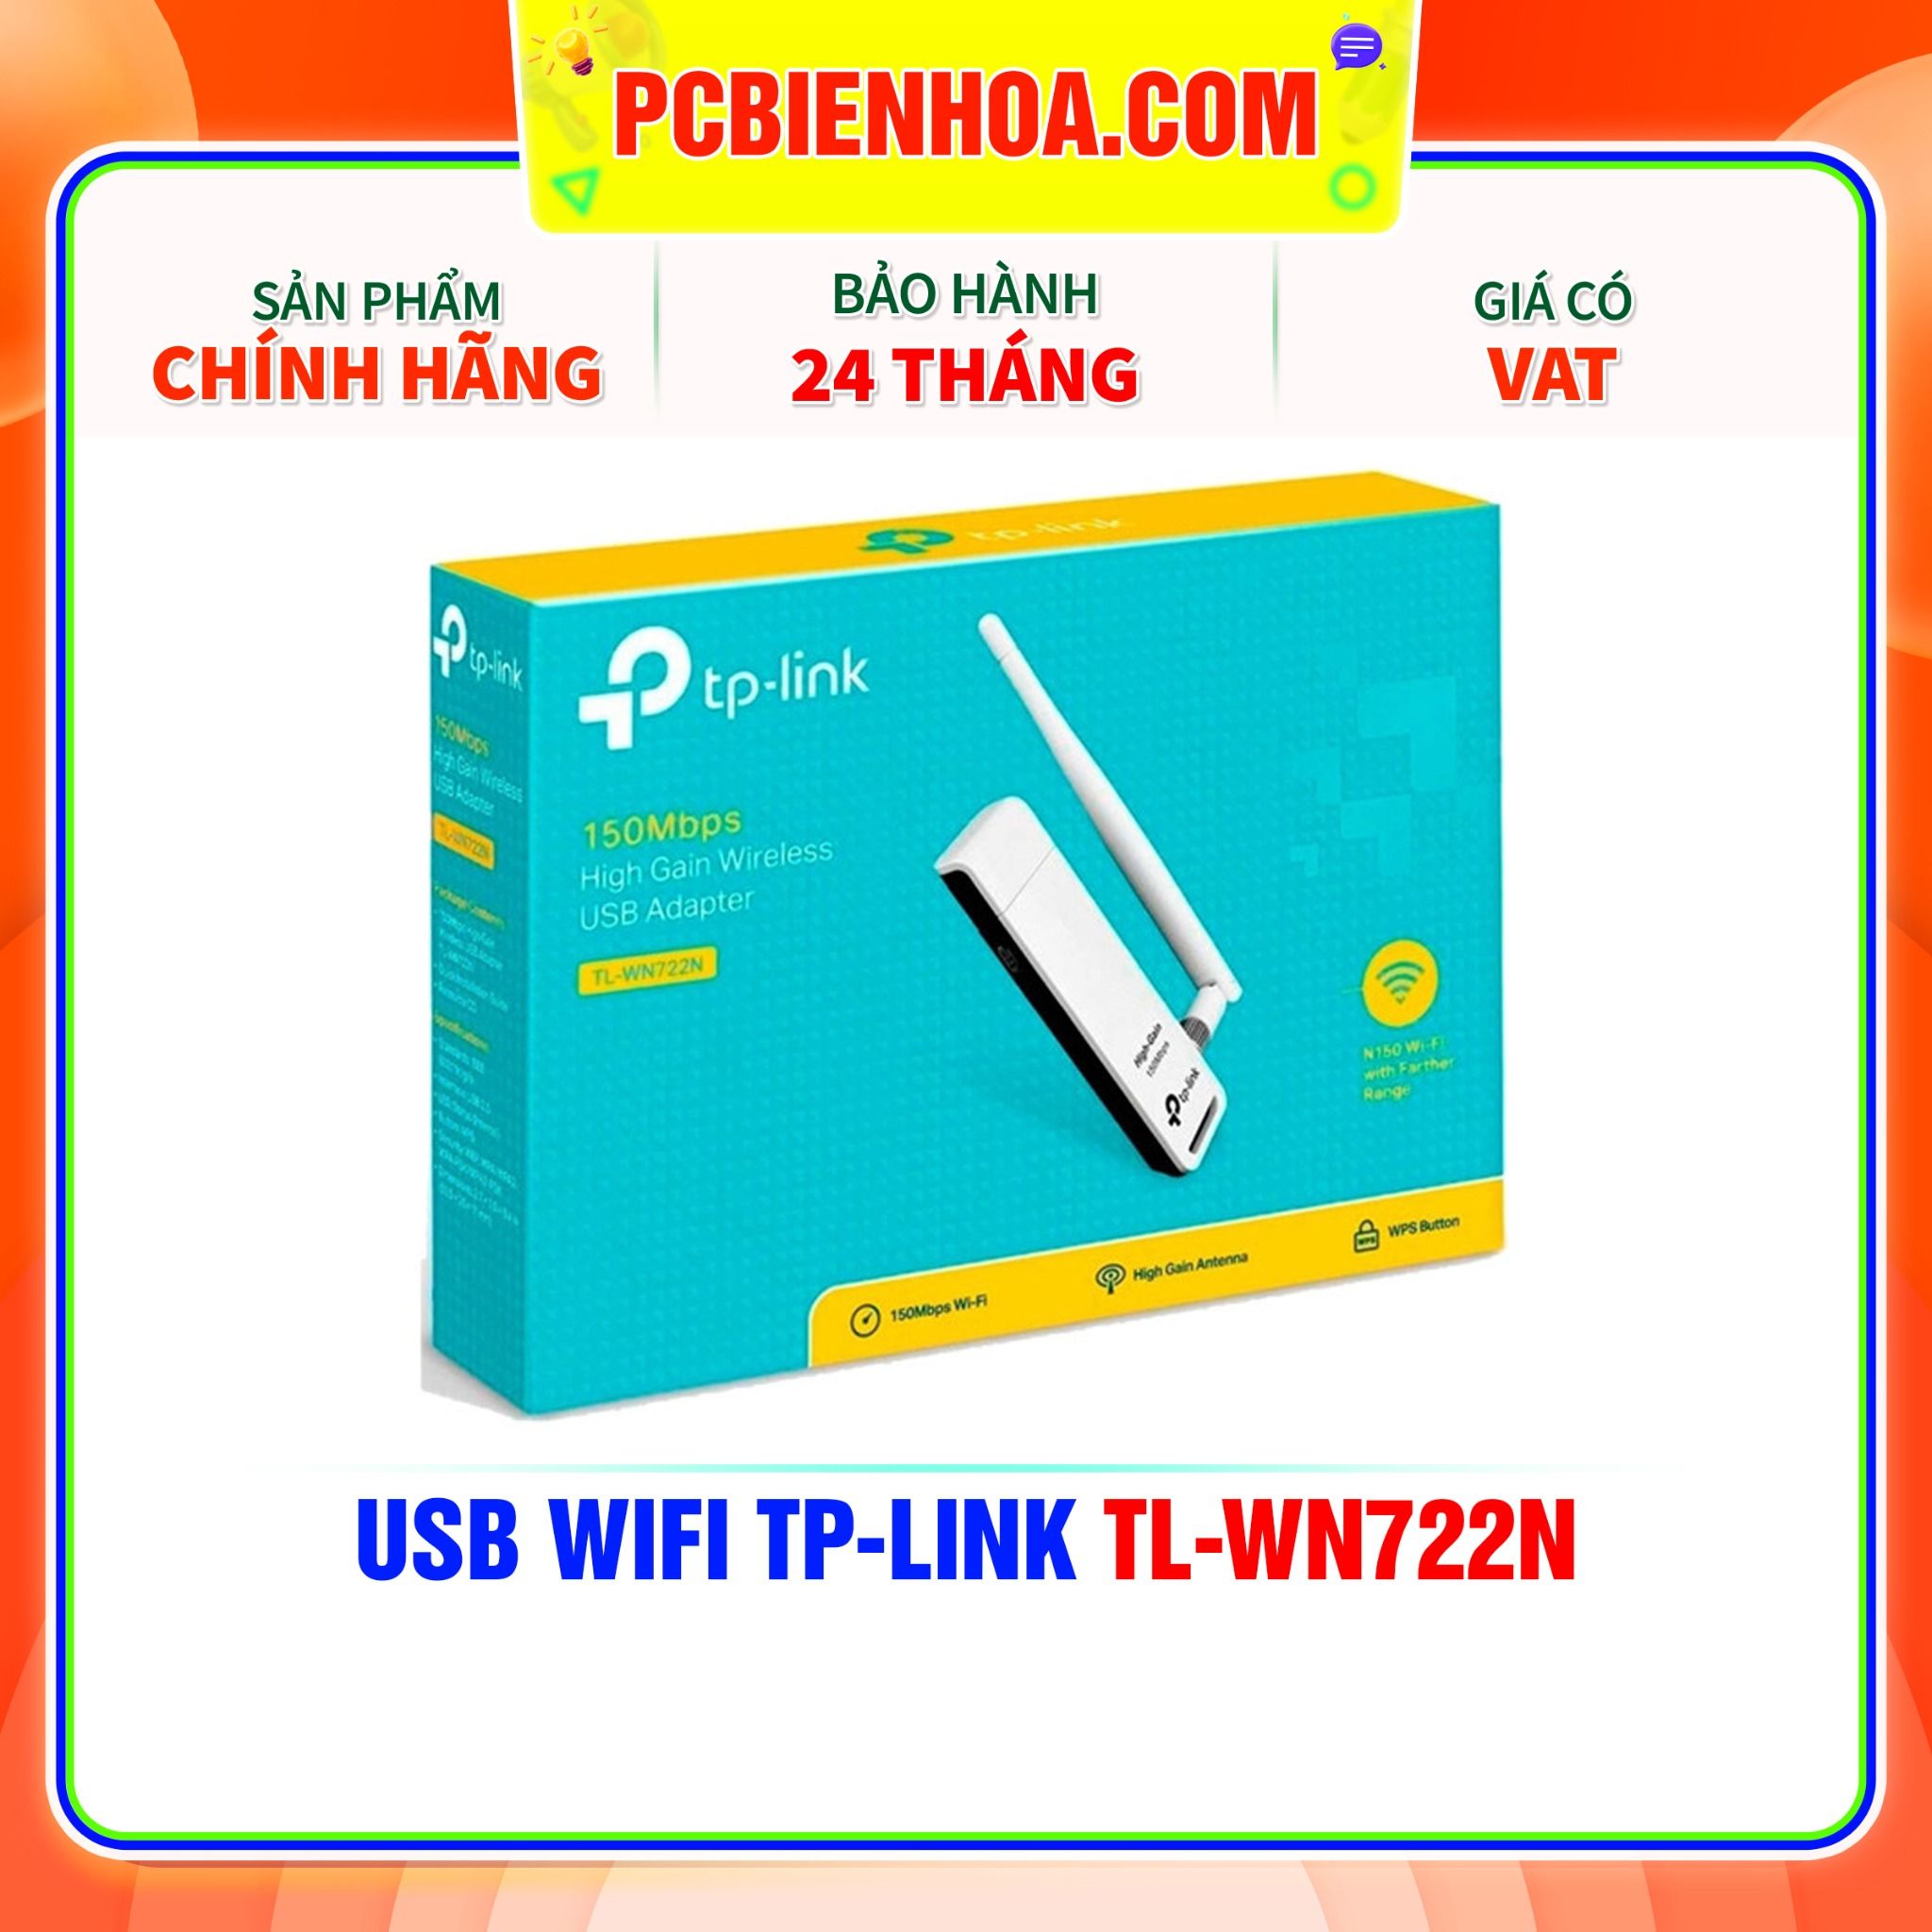  USB Wifi - TP-Link TL-WN722N 